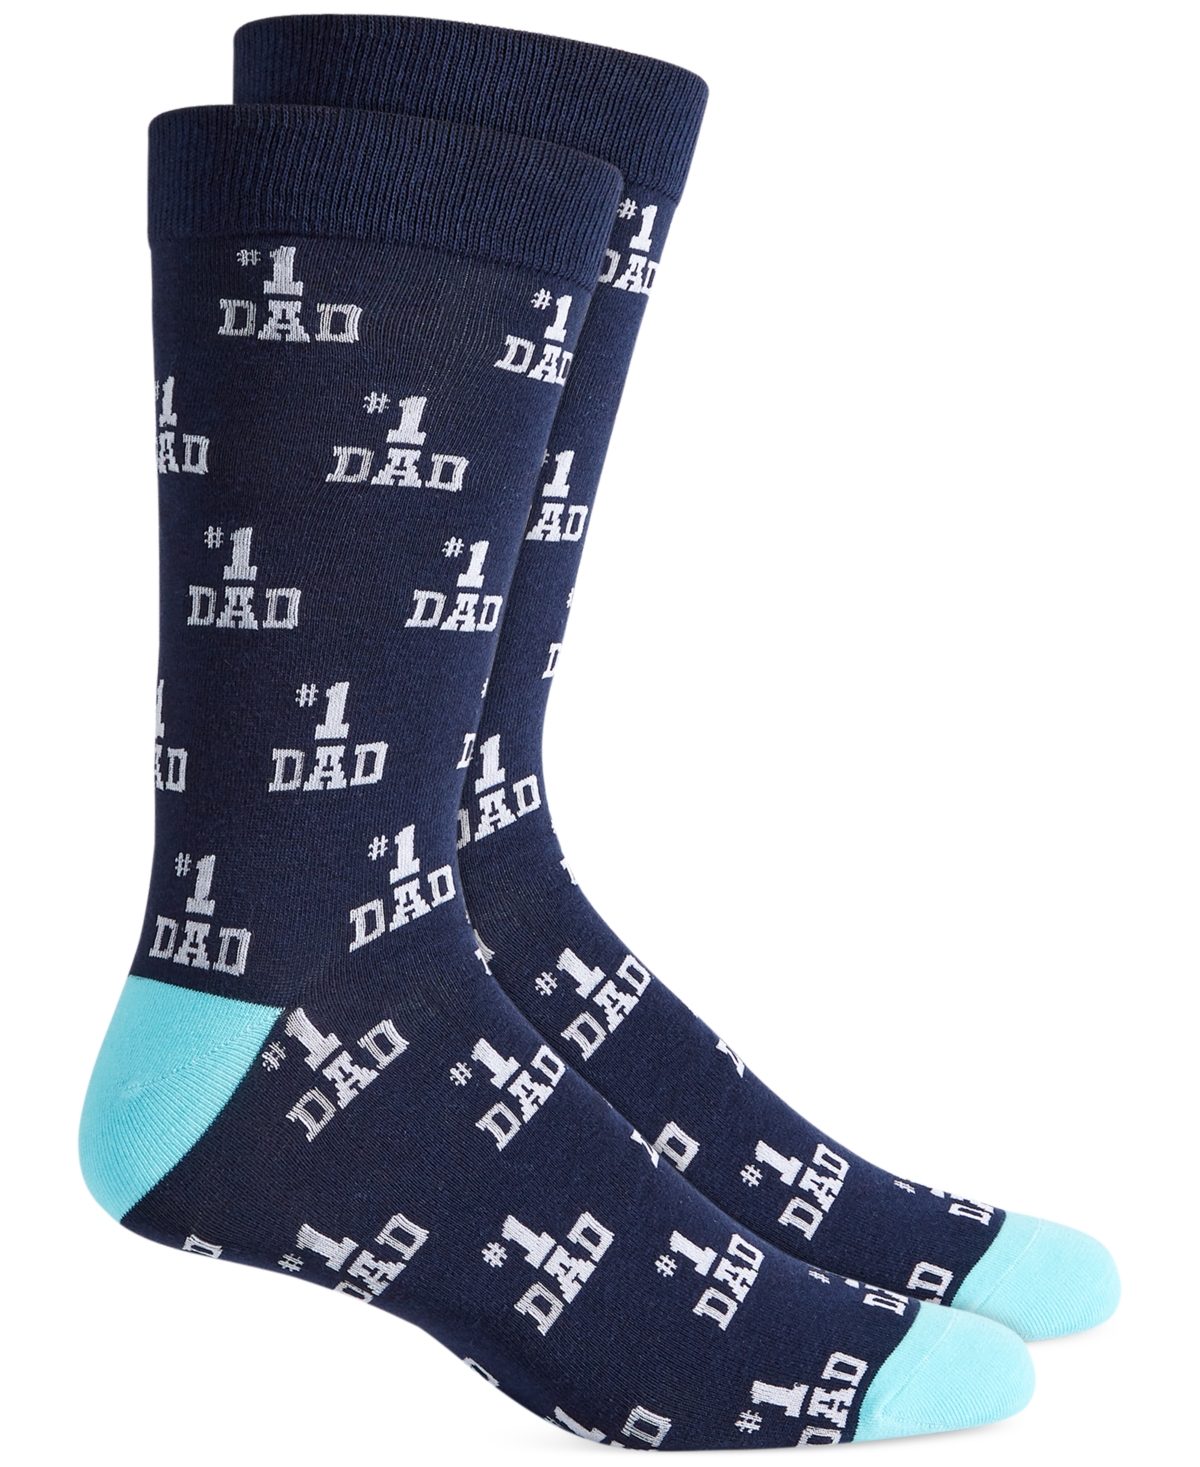 Men's #1 Dad Crew Socks, Created for Macy's - Grey/navy